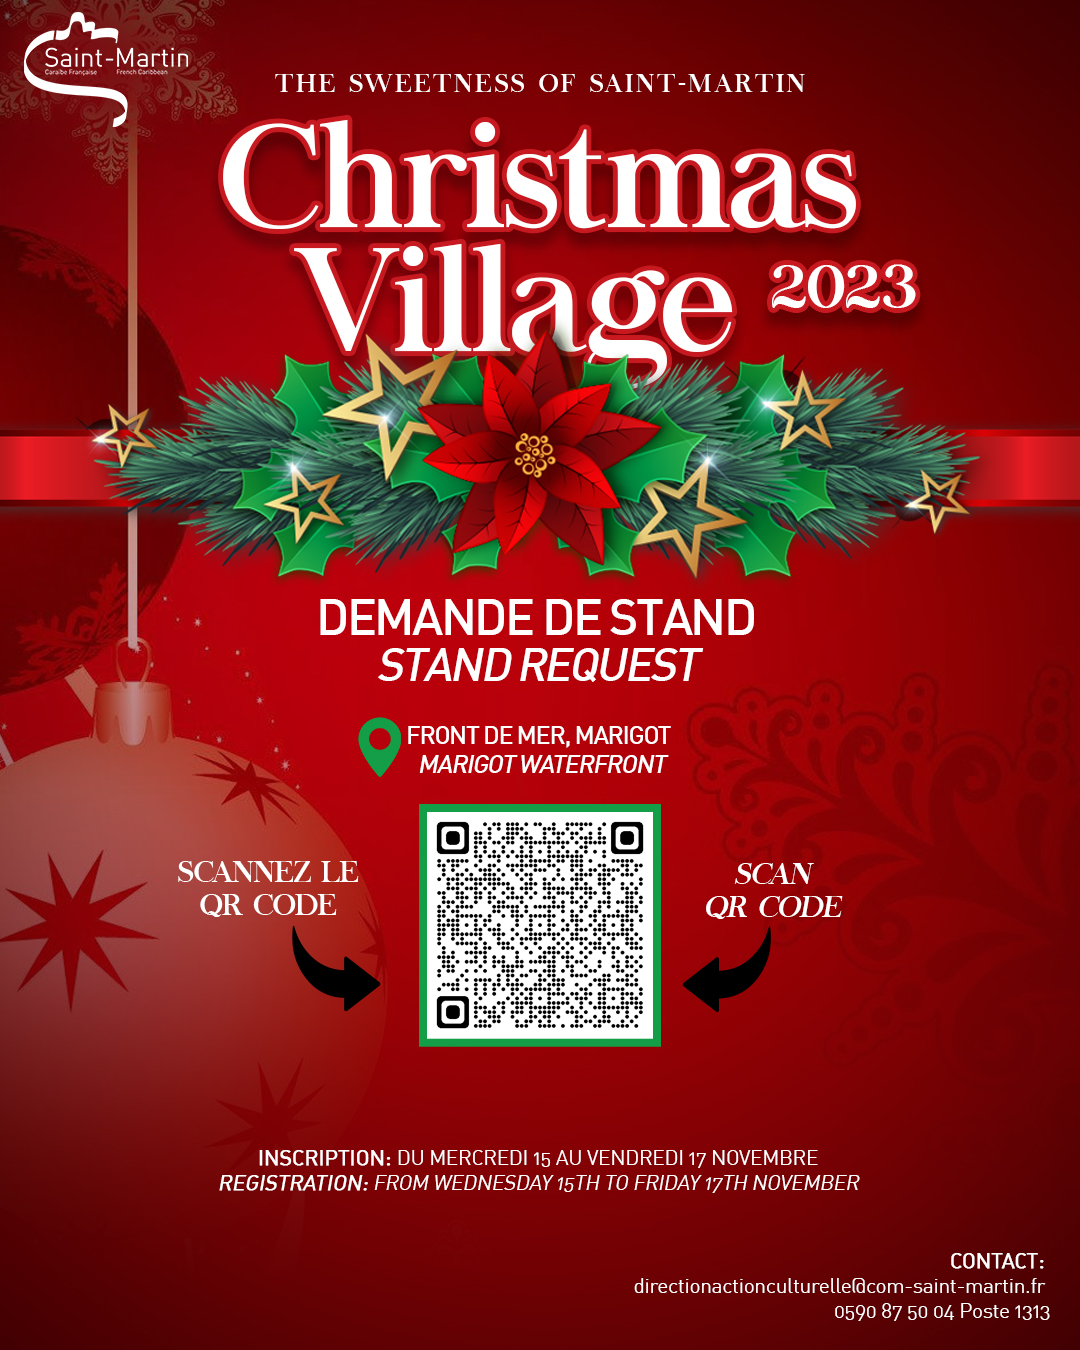 DEMANDE DE STAND - THE SWEETNESS OF SAINT-MARTIN CHRISTMAS VILLAGE 2023 !